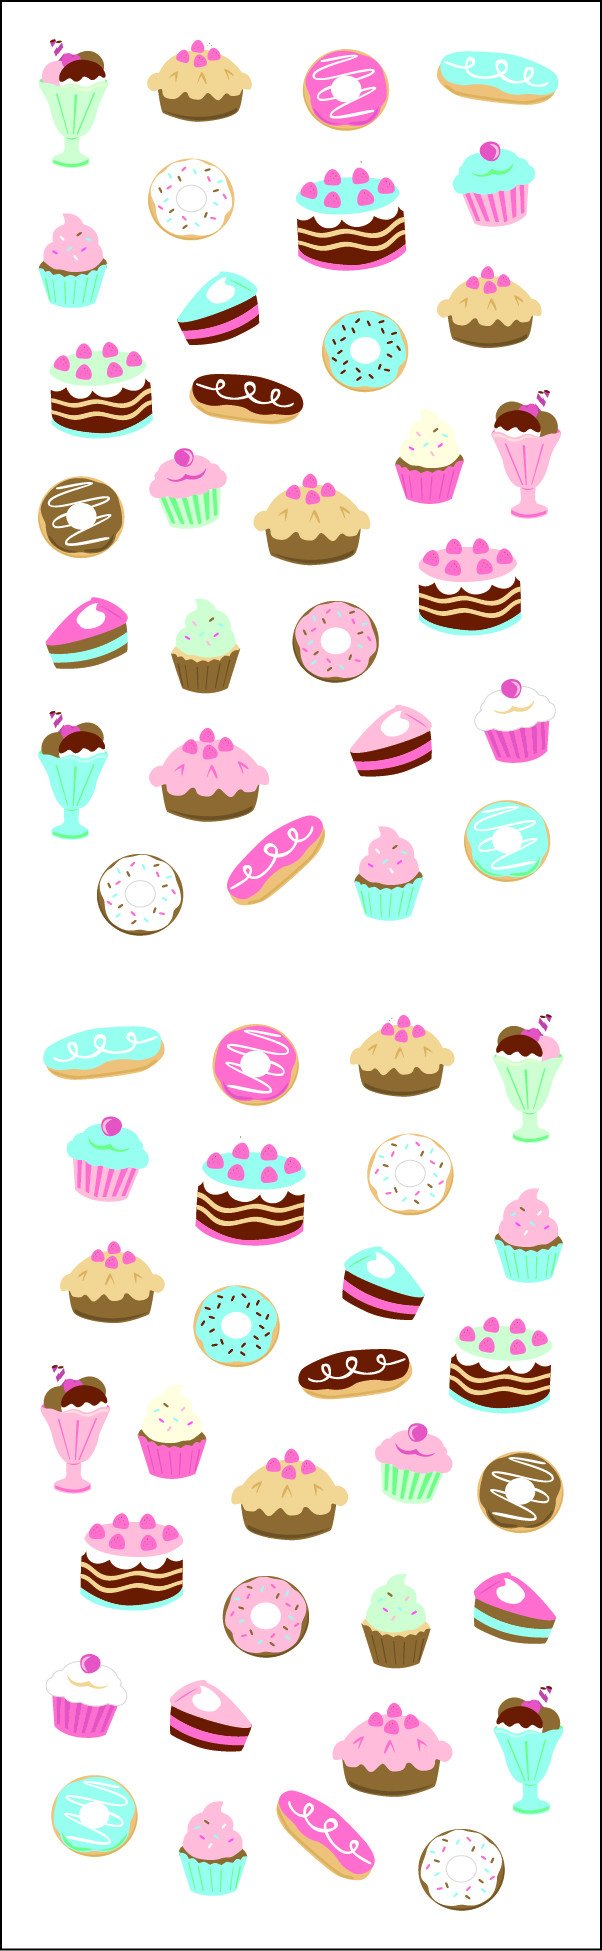 Food Tagged cupcakes - Mrs. Grossman's